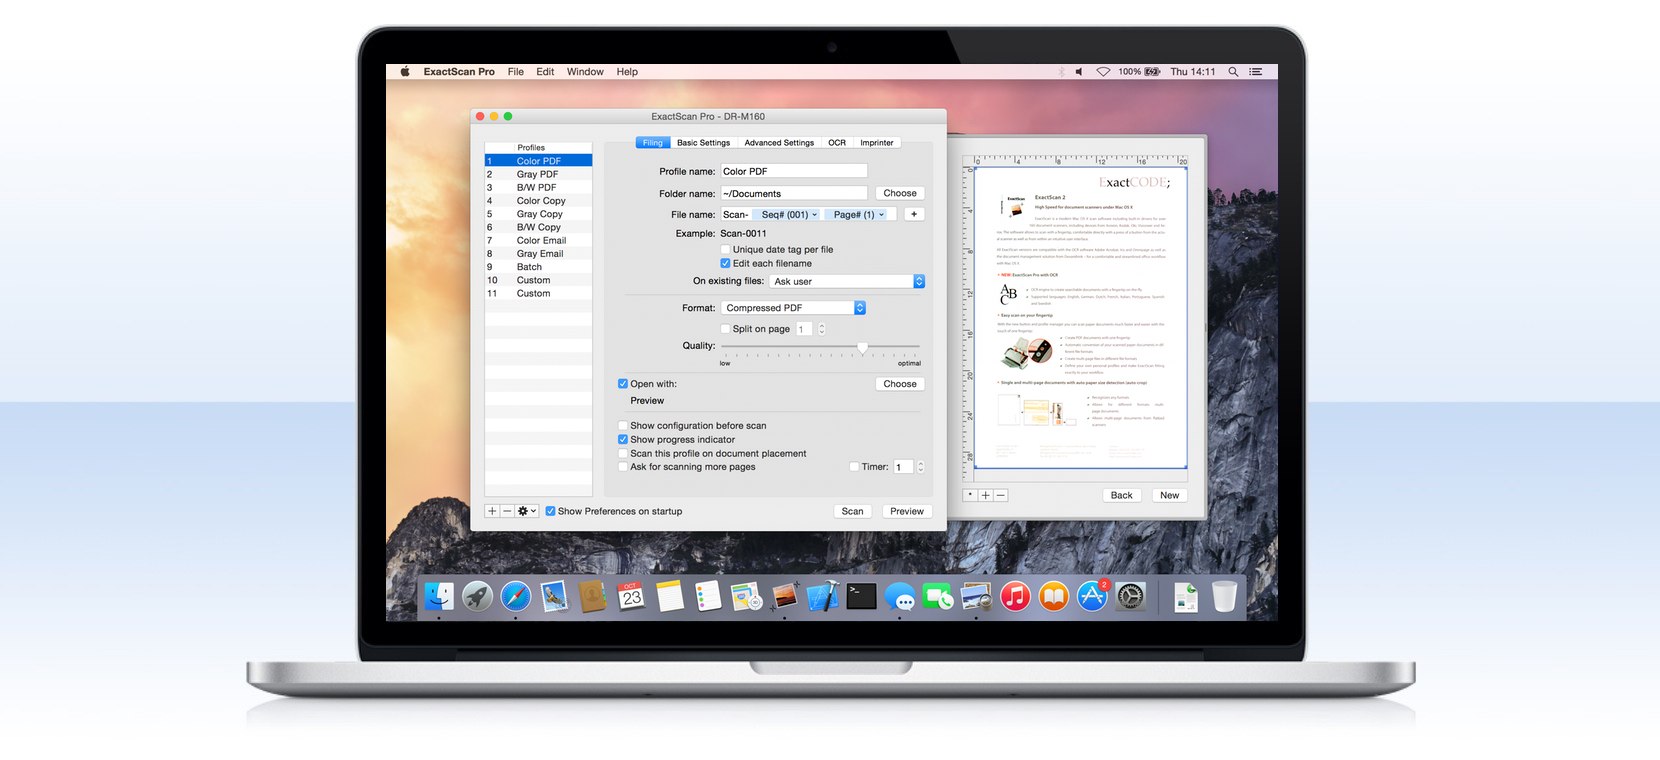 pluglink 9650 software download for apple mac